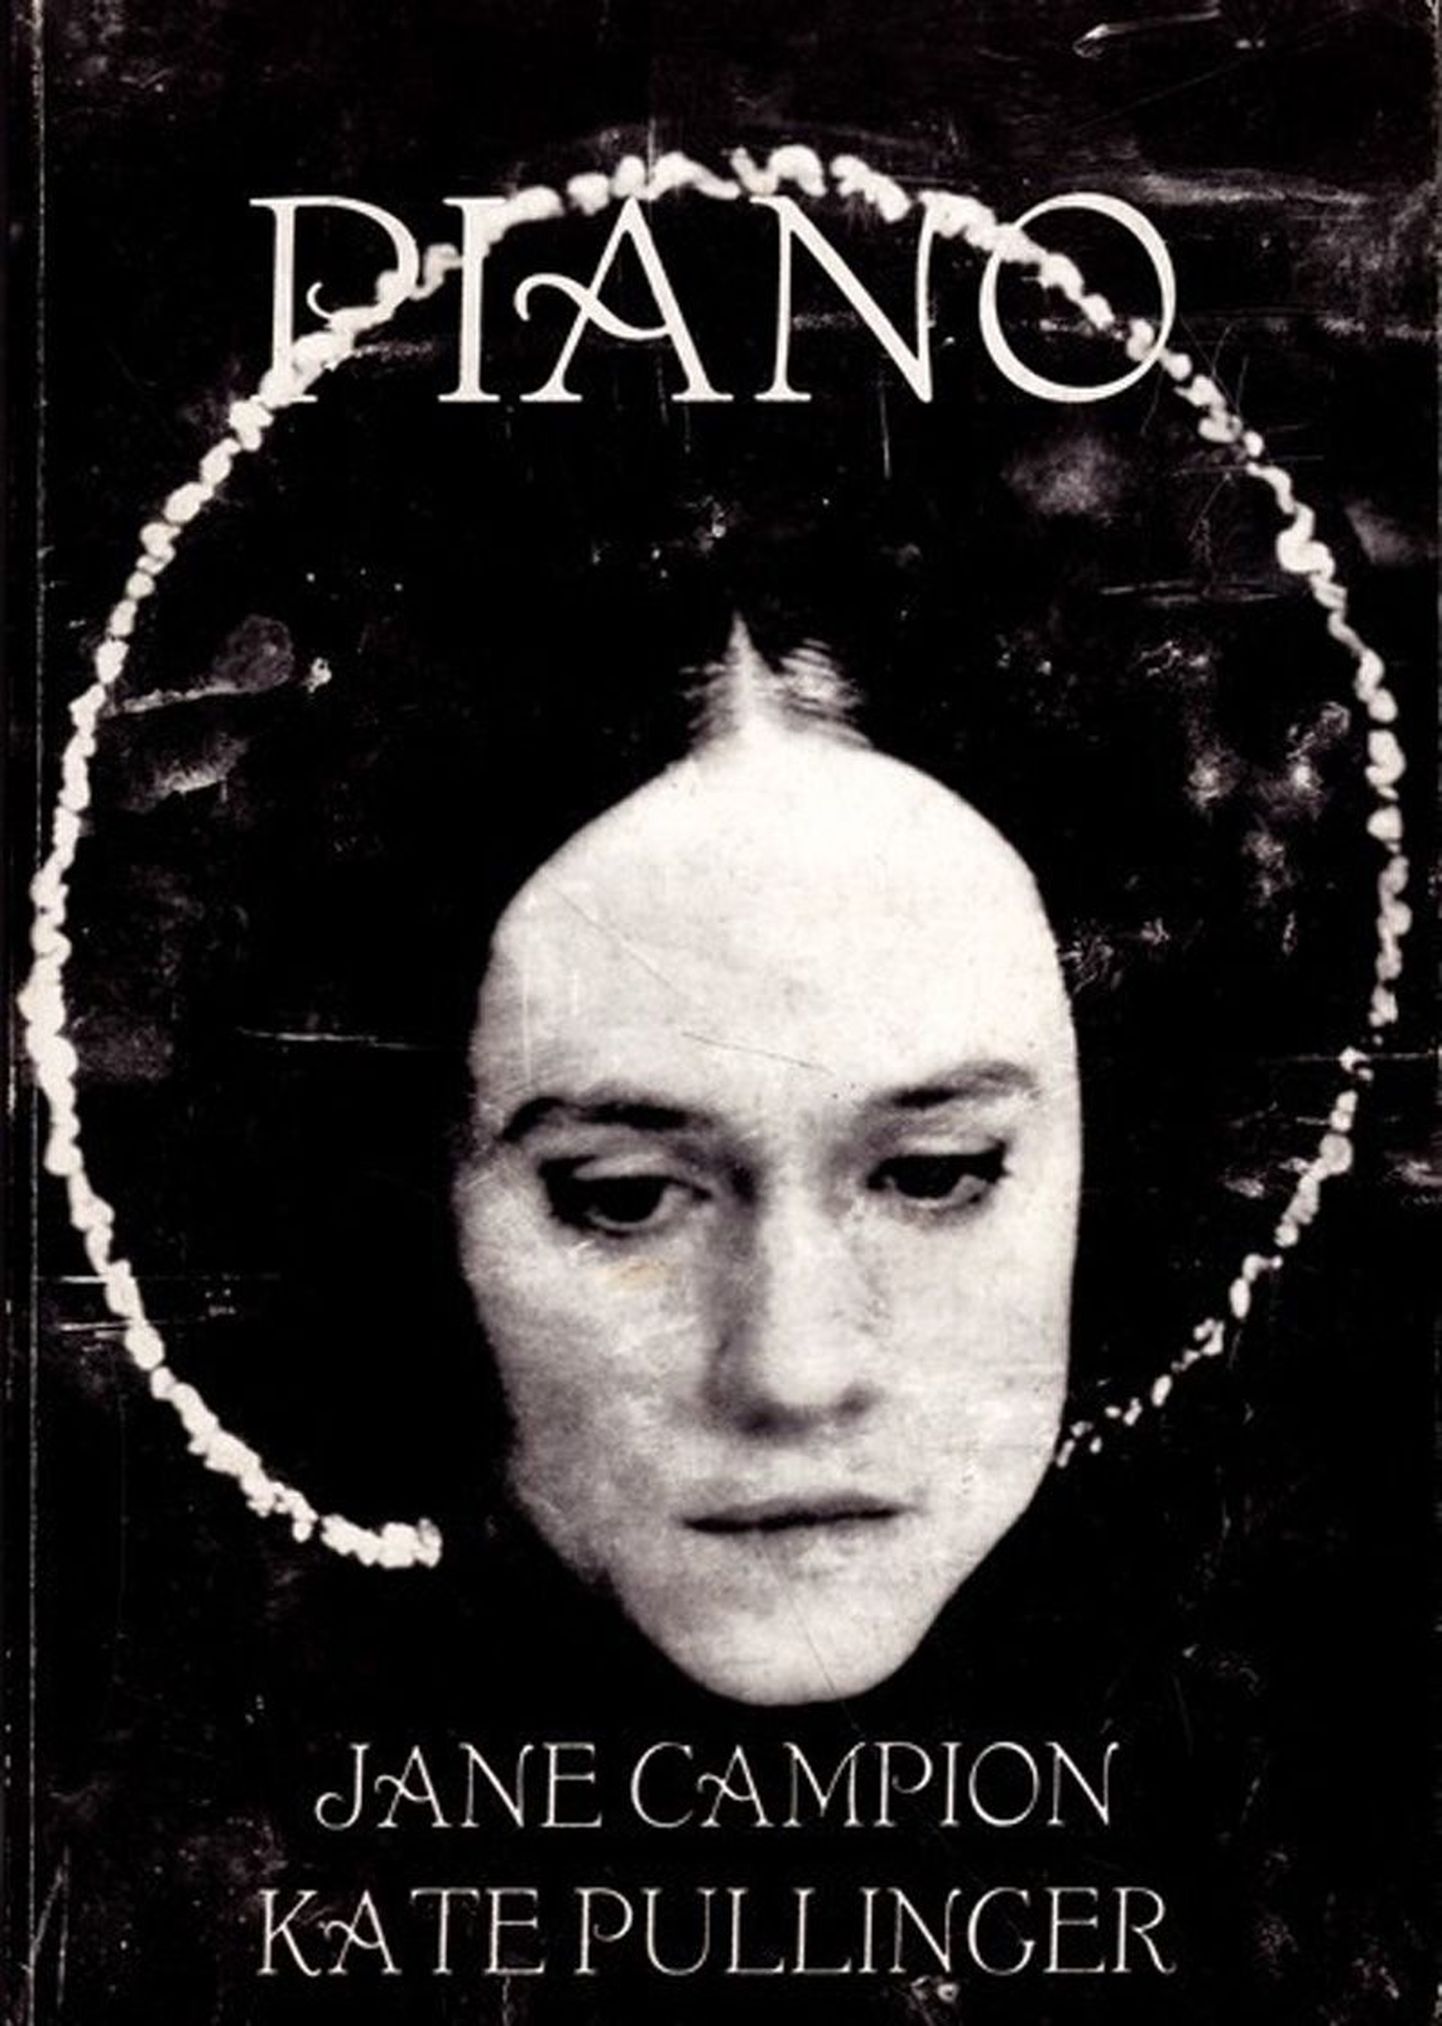 Jane Campion, Kate Pullinger “PIANO”